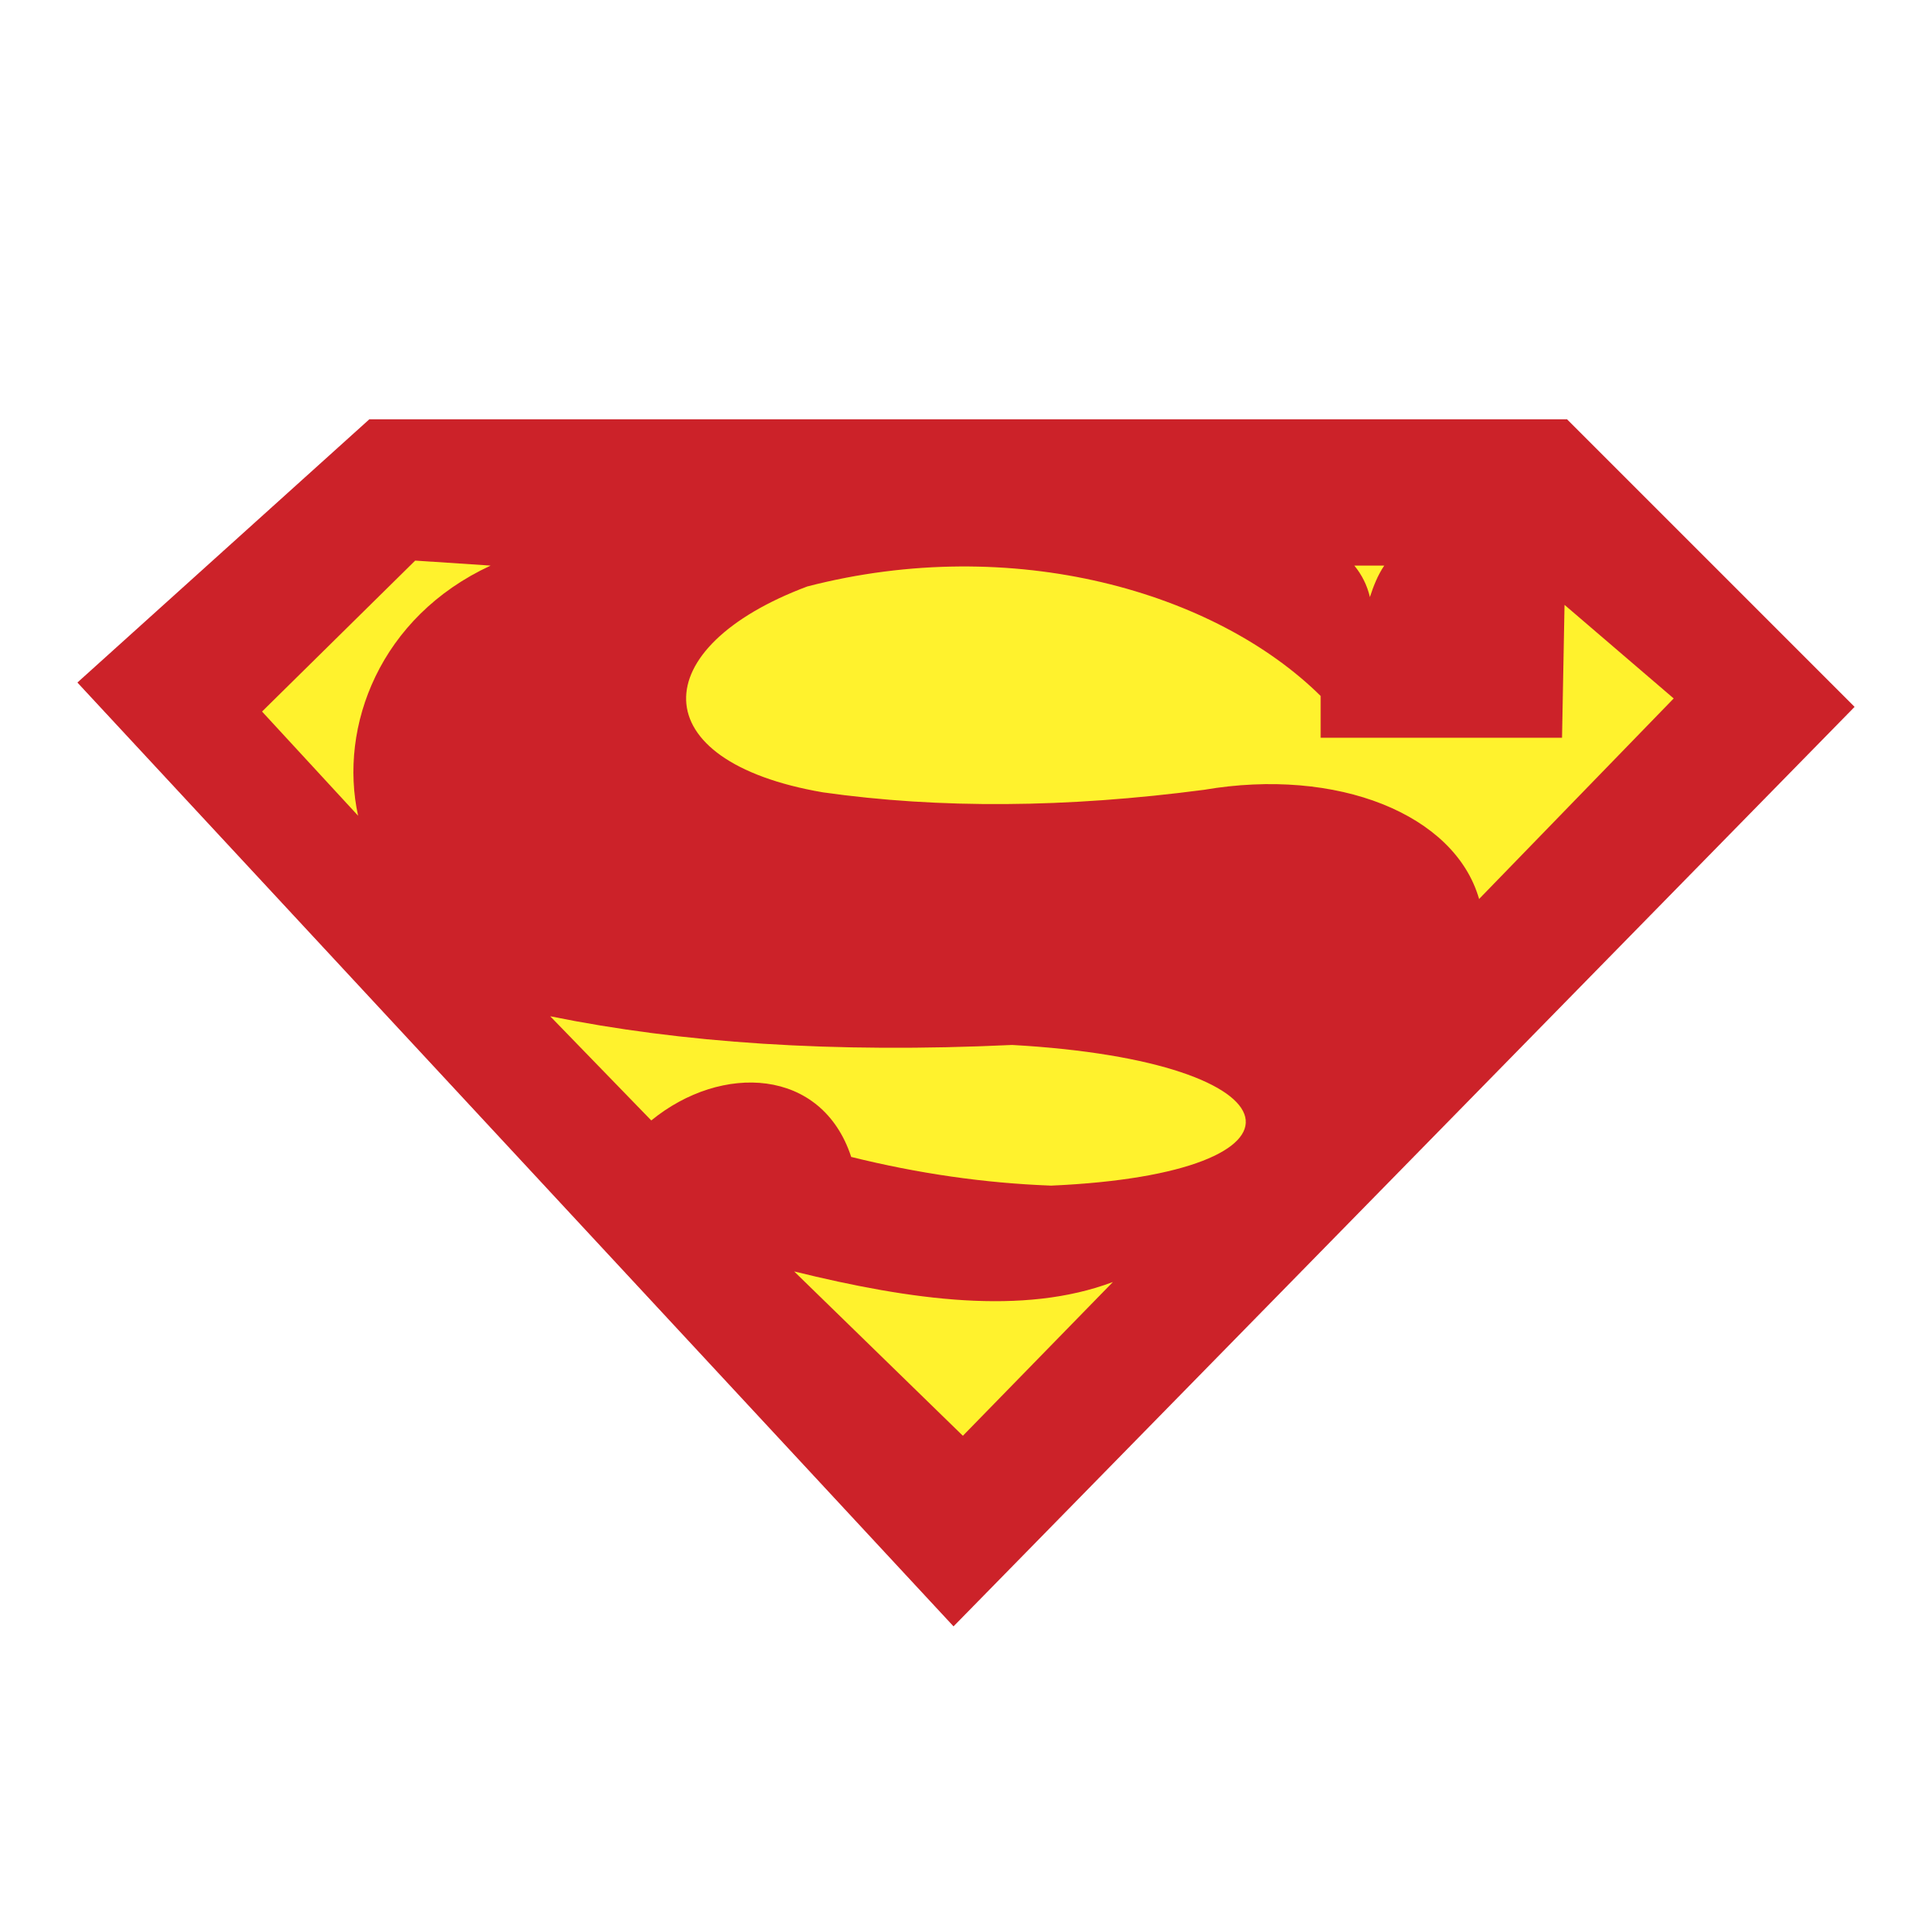 Red Black and White Superman Logo - Superman Logo PNG Transparent & SVG Vector